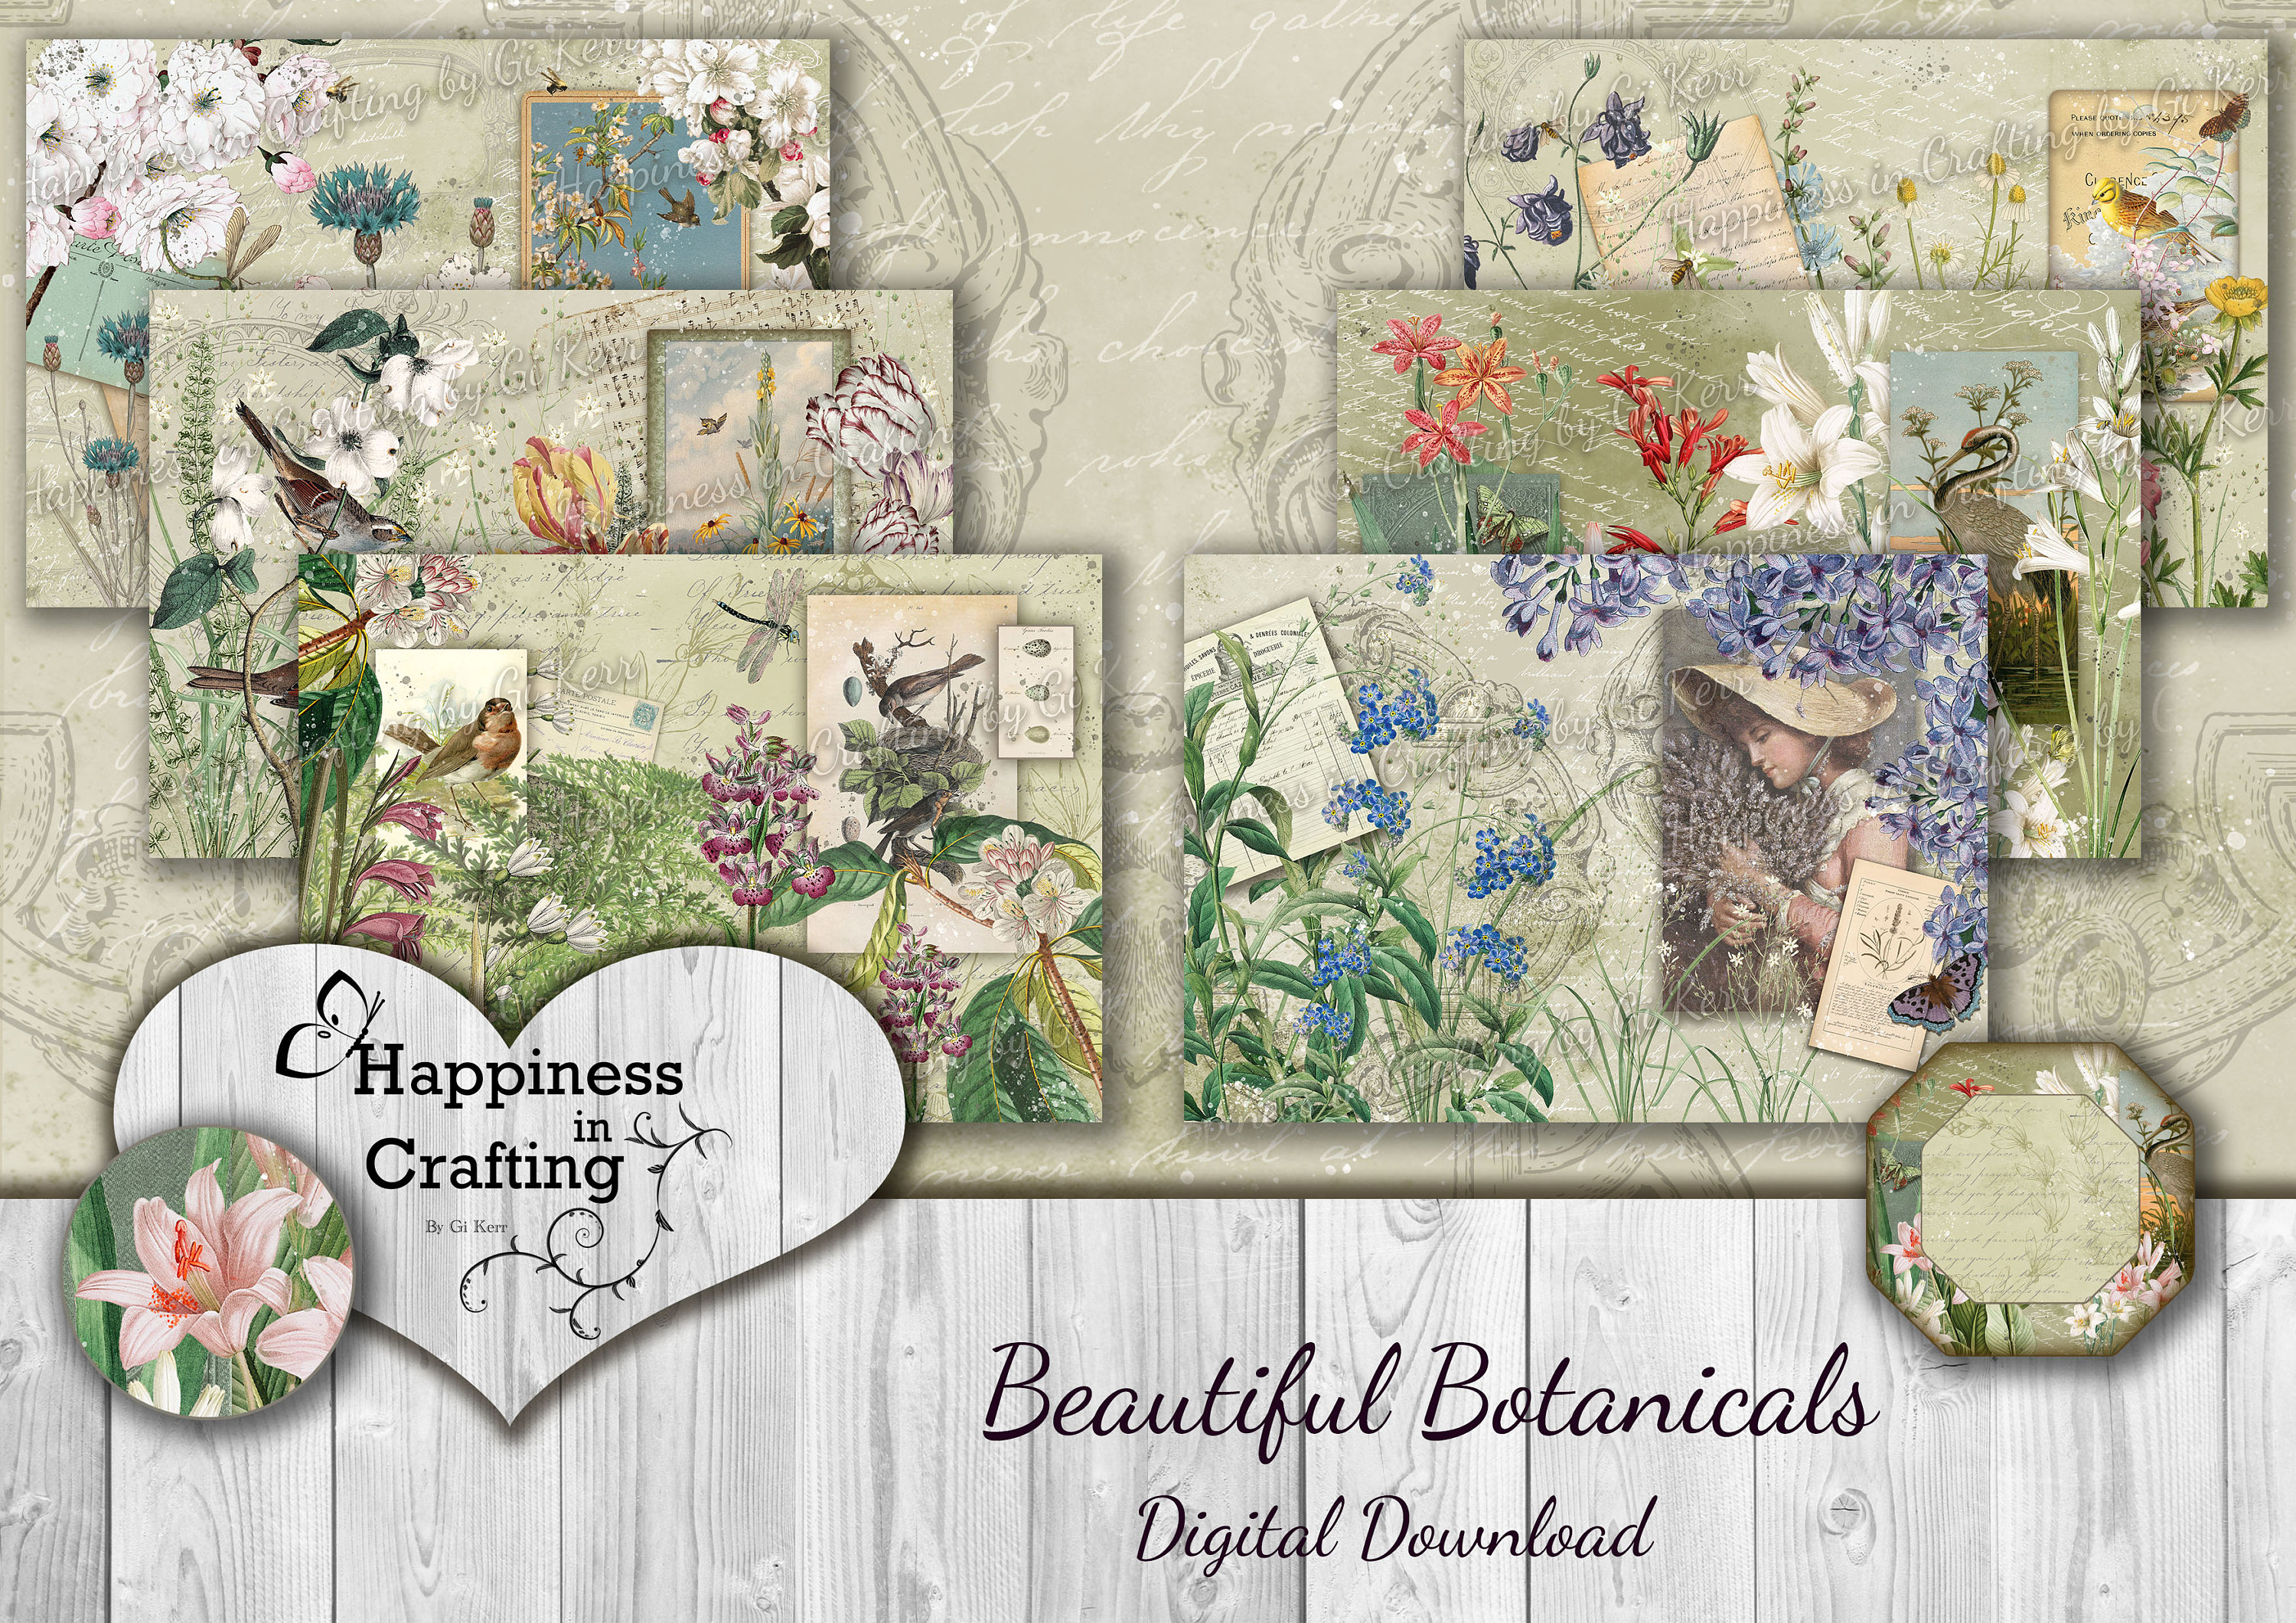 Beautiful botanicals instant digital download printable digital kit for junk journals scrapbooking happiness in crafting gi kerr